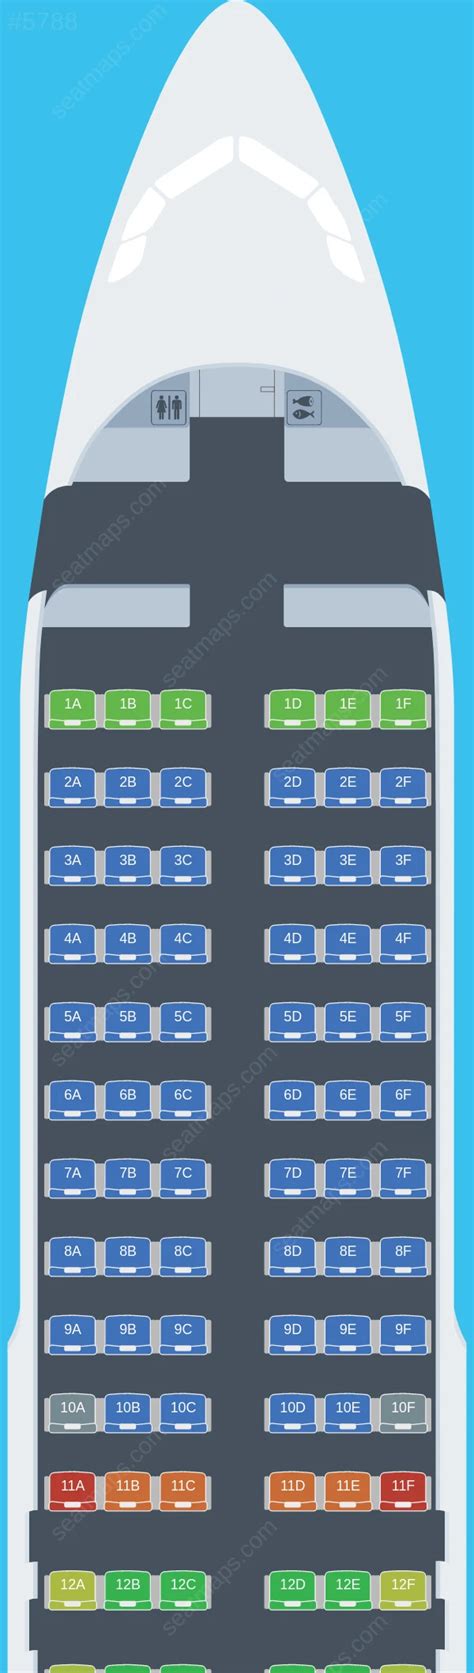 Seat Map Ratings Of Finnair Airbus A